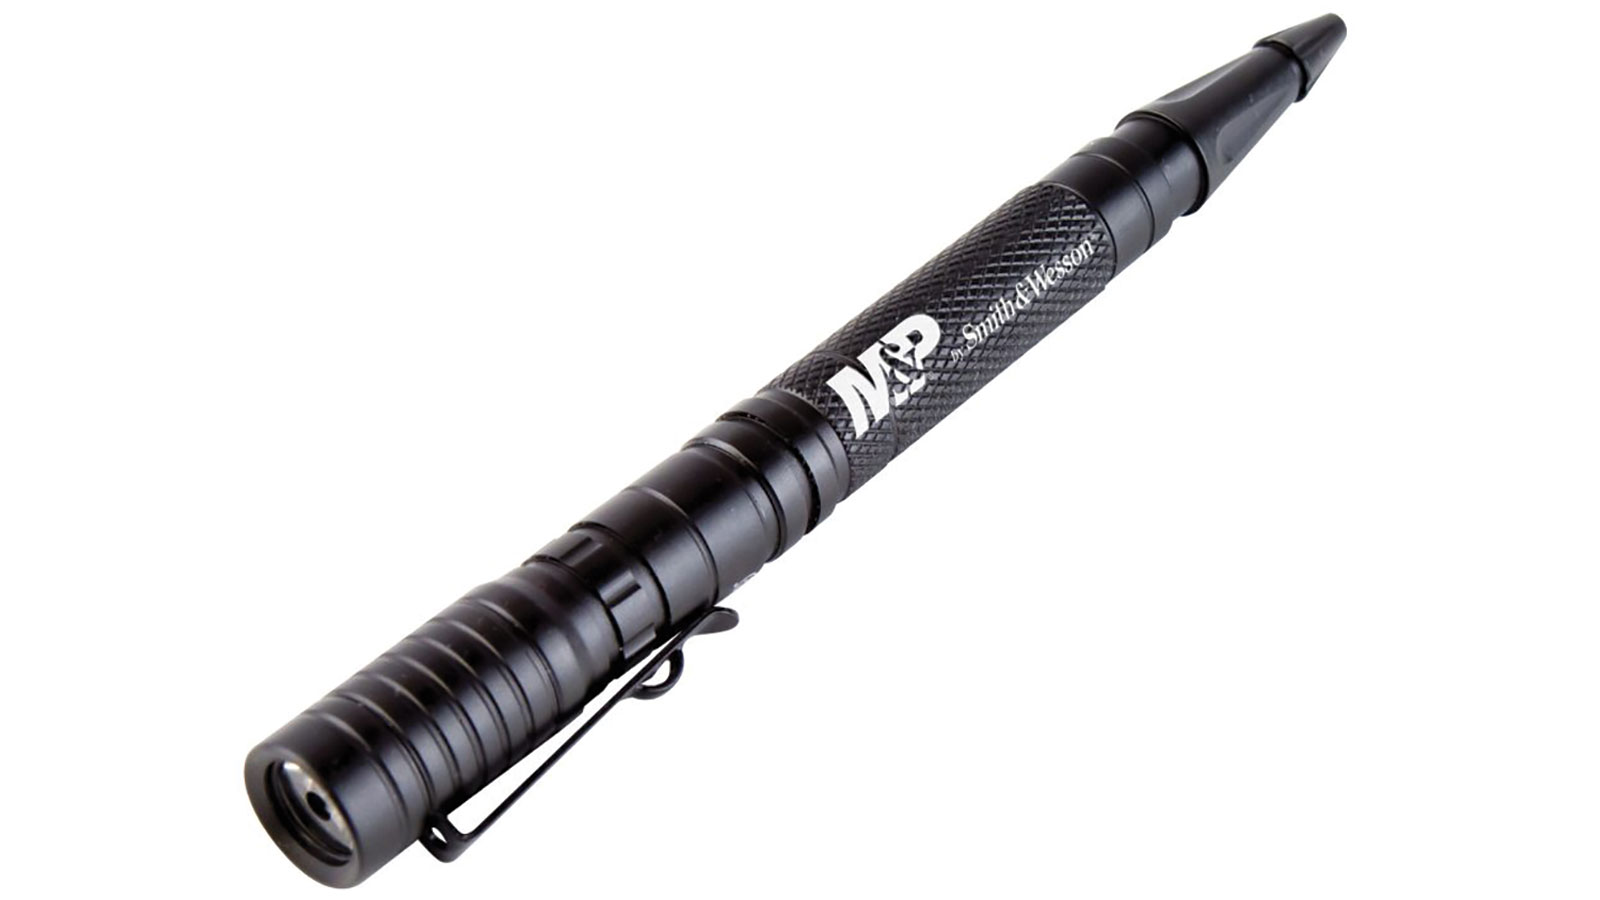 M&P Accessories 110155 Delta Force PL-10 Penlight Black Anodized Aluminum Cree LED 105 Lumens 62 Meters Range with Refillable Pen Includes Batteries